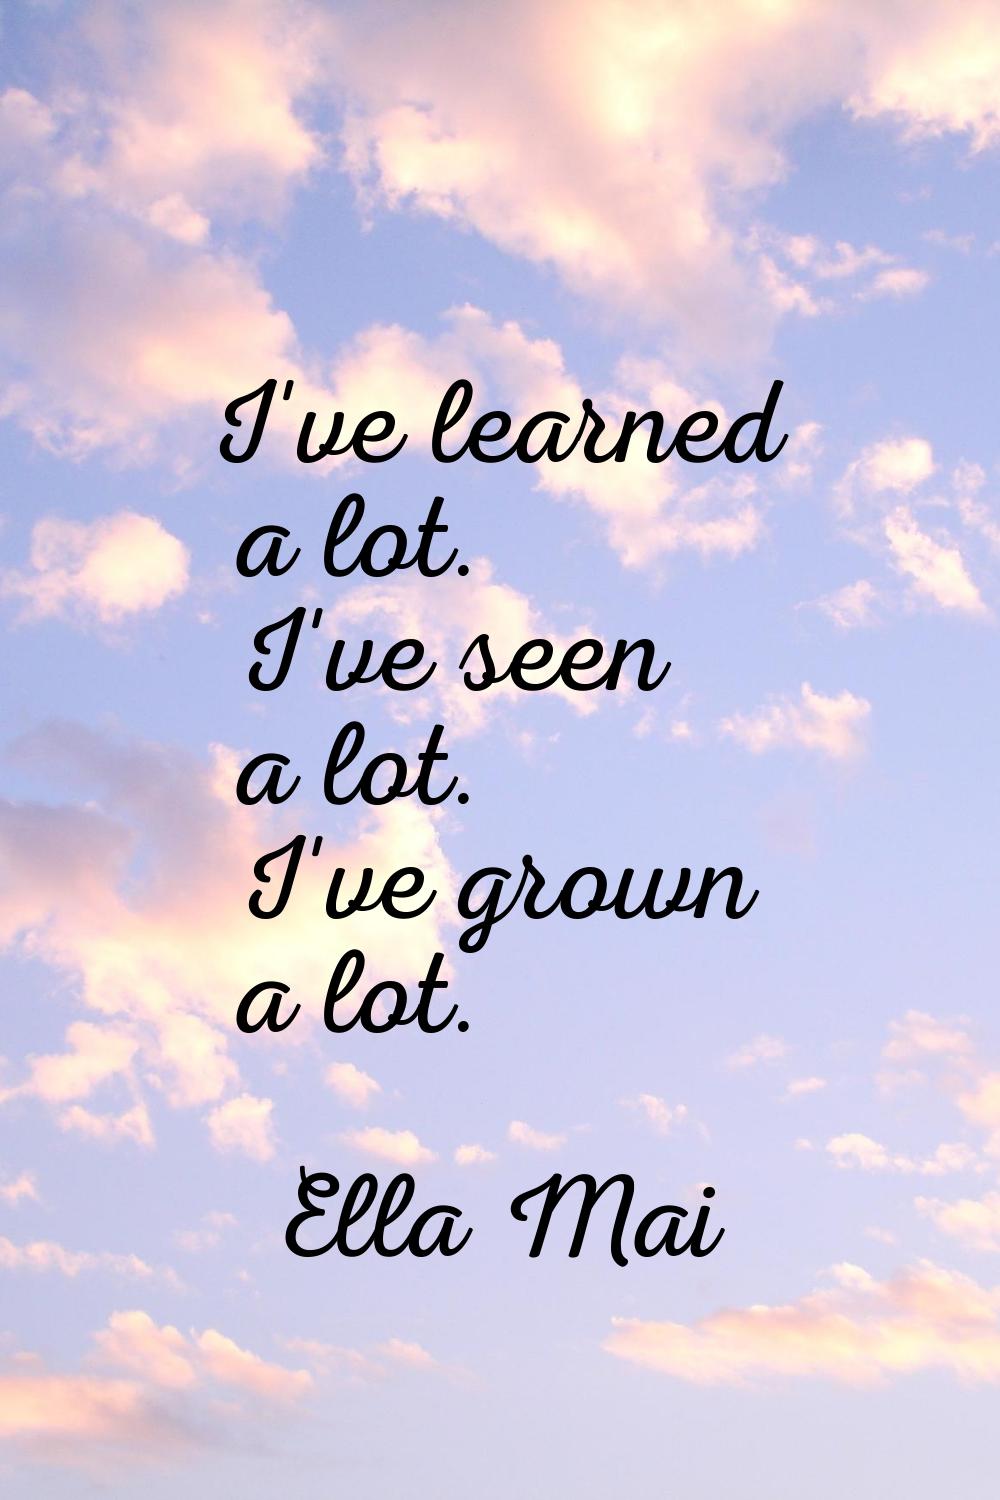 I've learned a lot. I've seen a lot. I've grown a lot.